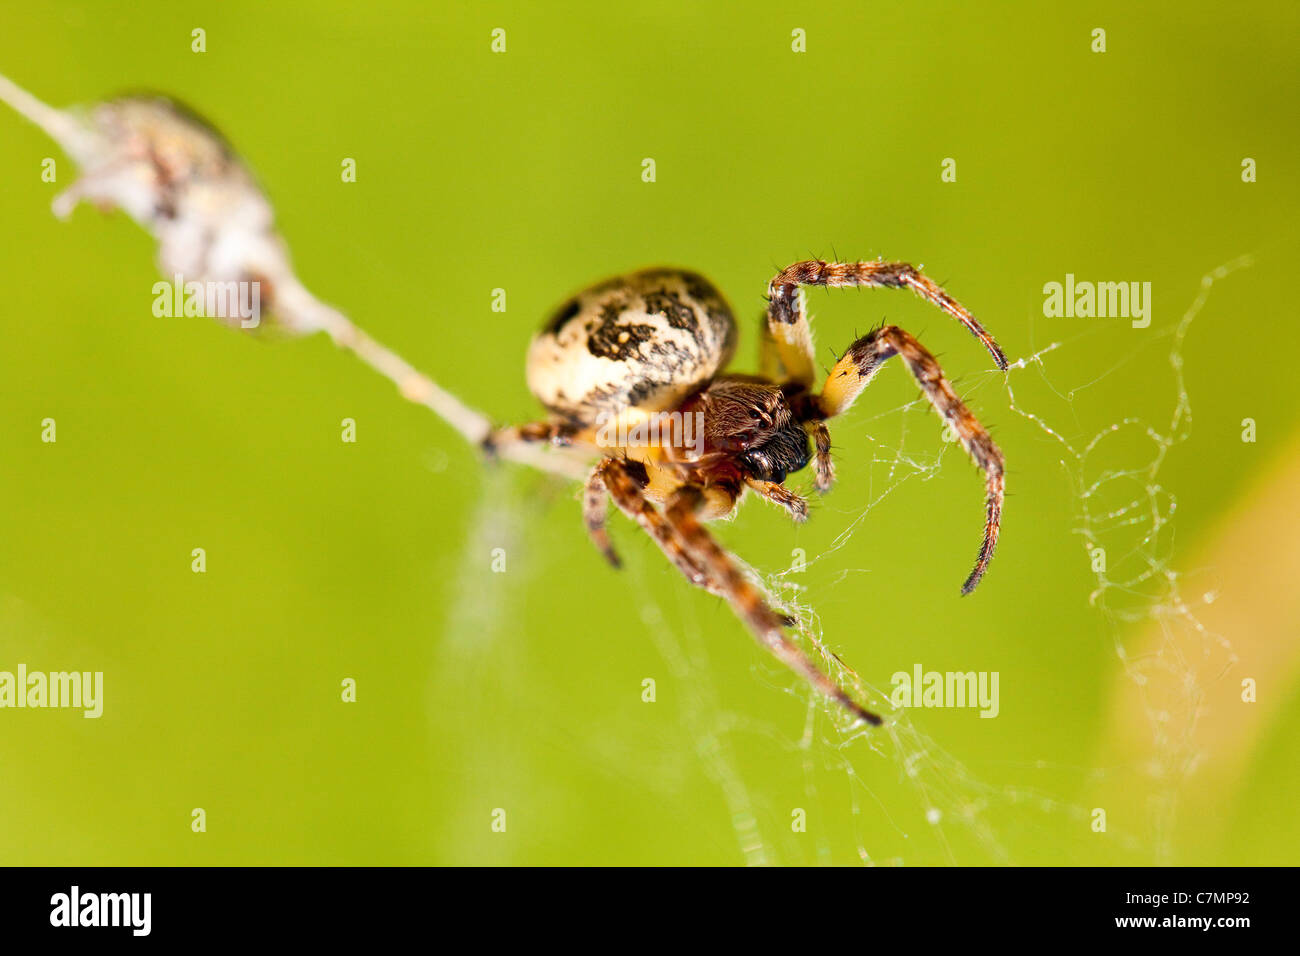 Giardino europeo spider, diadema spider, ragno trasversale, o traversa orbweaver (Araneus diadematus) sul web Foto Stock